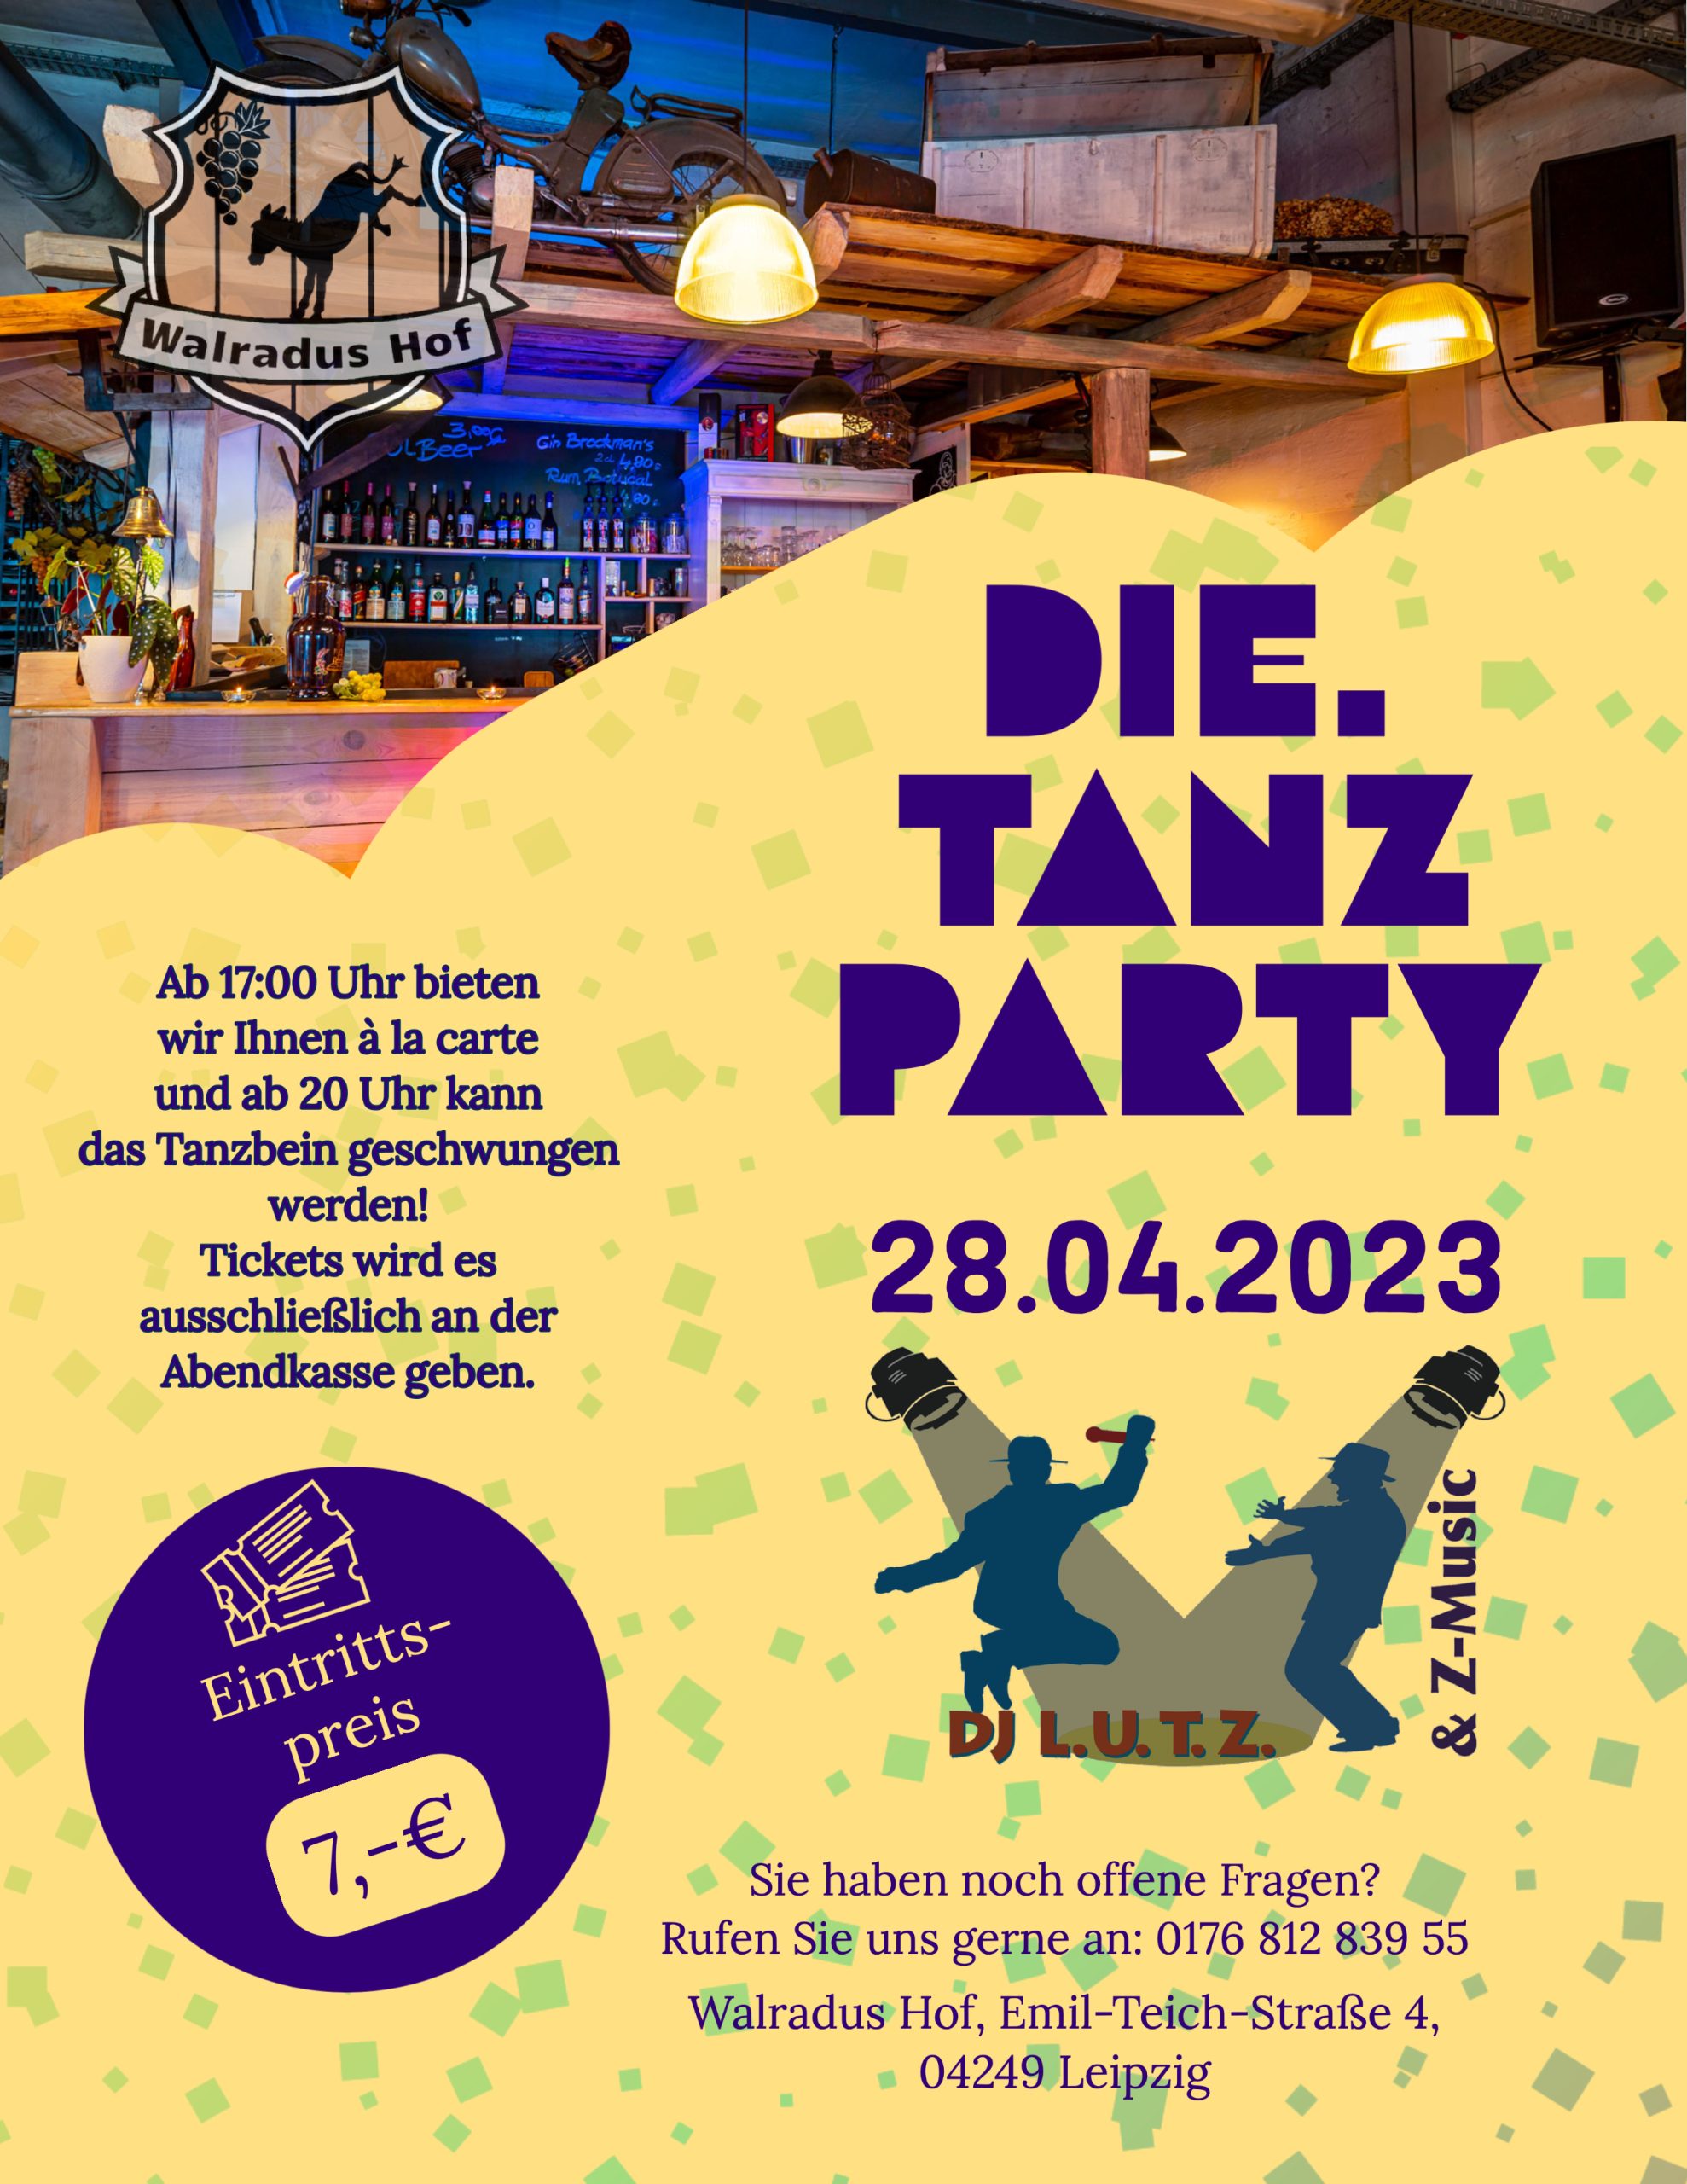 DIE TANZ-Party 28.04.2023